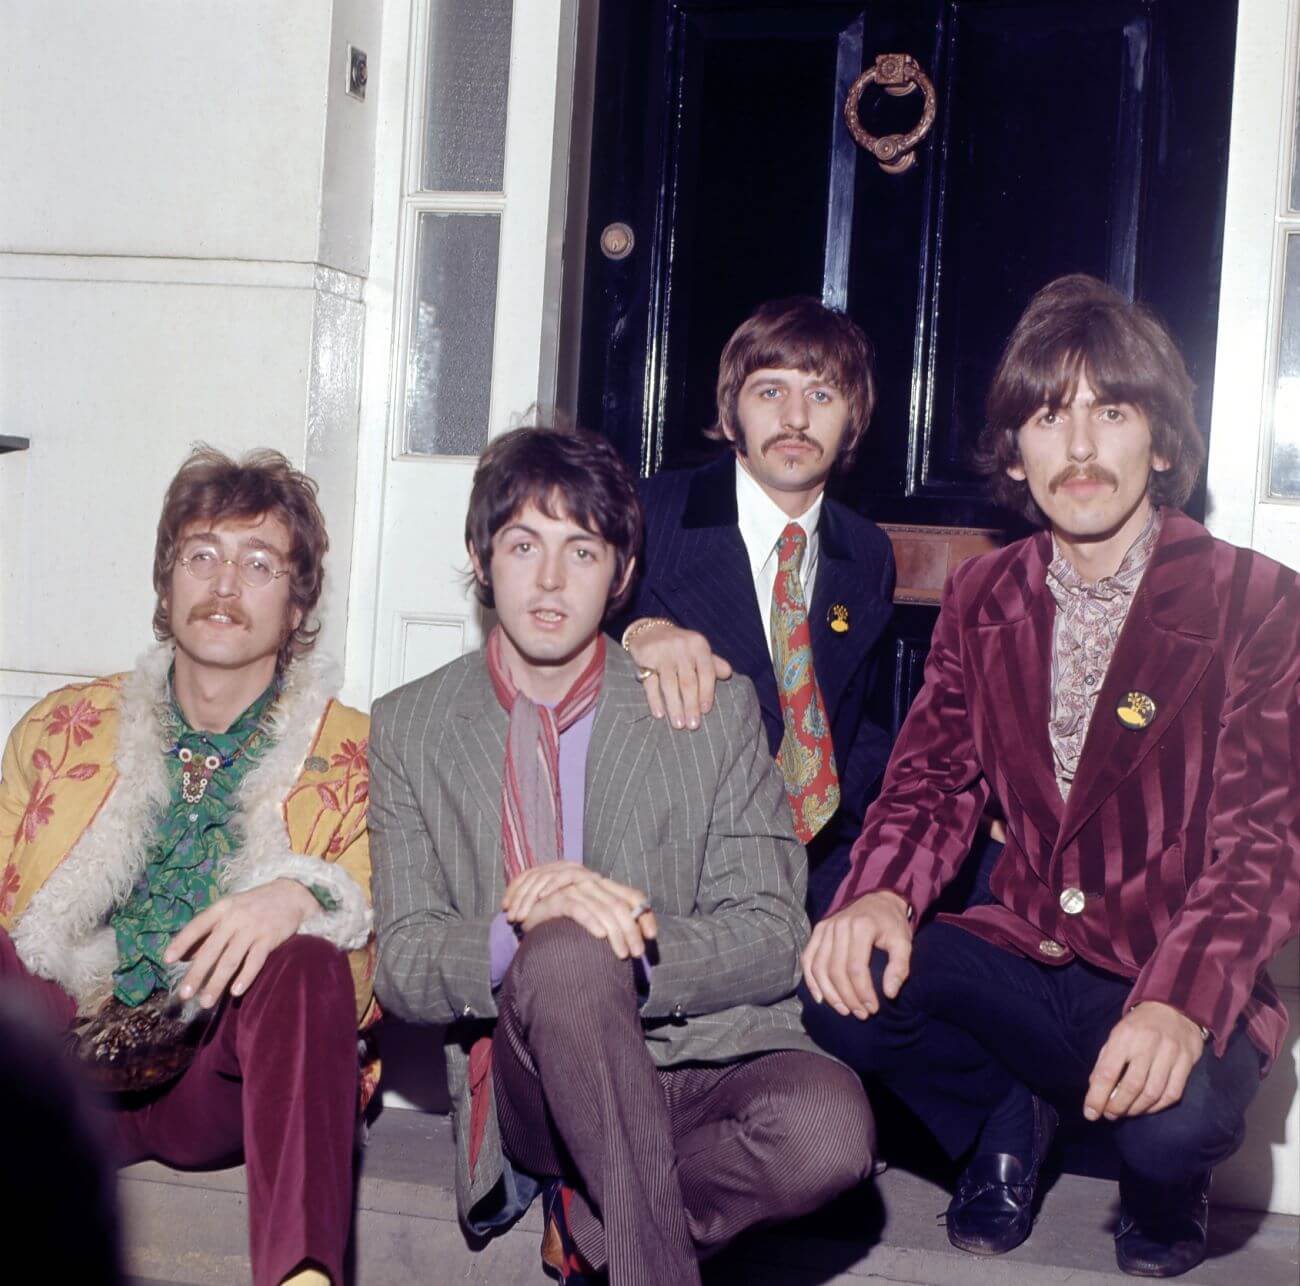 John Lennon, Paul McCartney, Ringo Starr, and George Harrison of The Beatles sit on a doorstep.